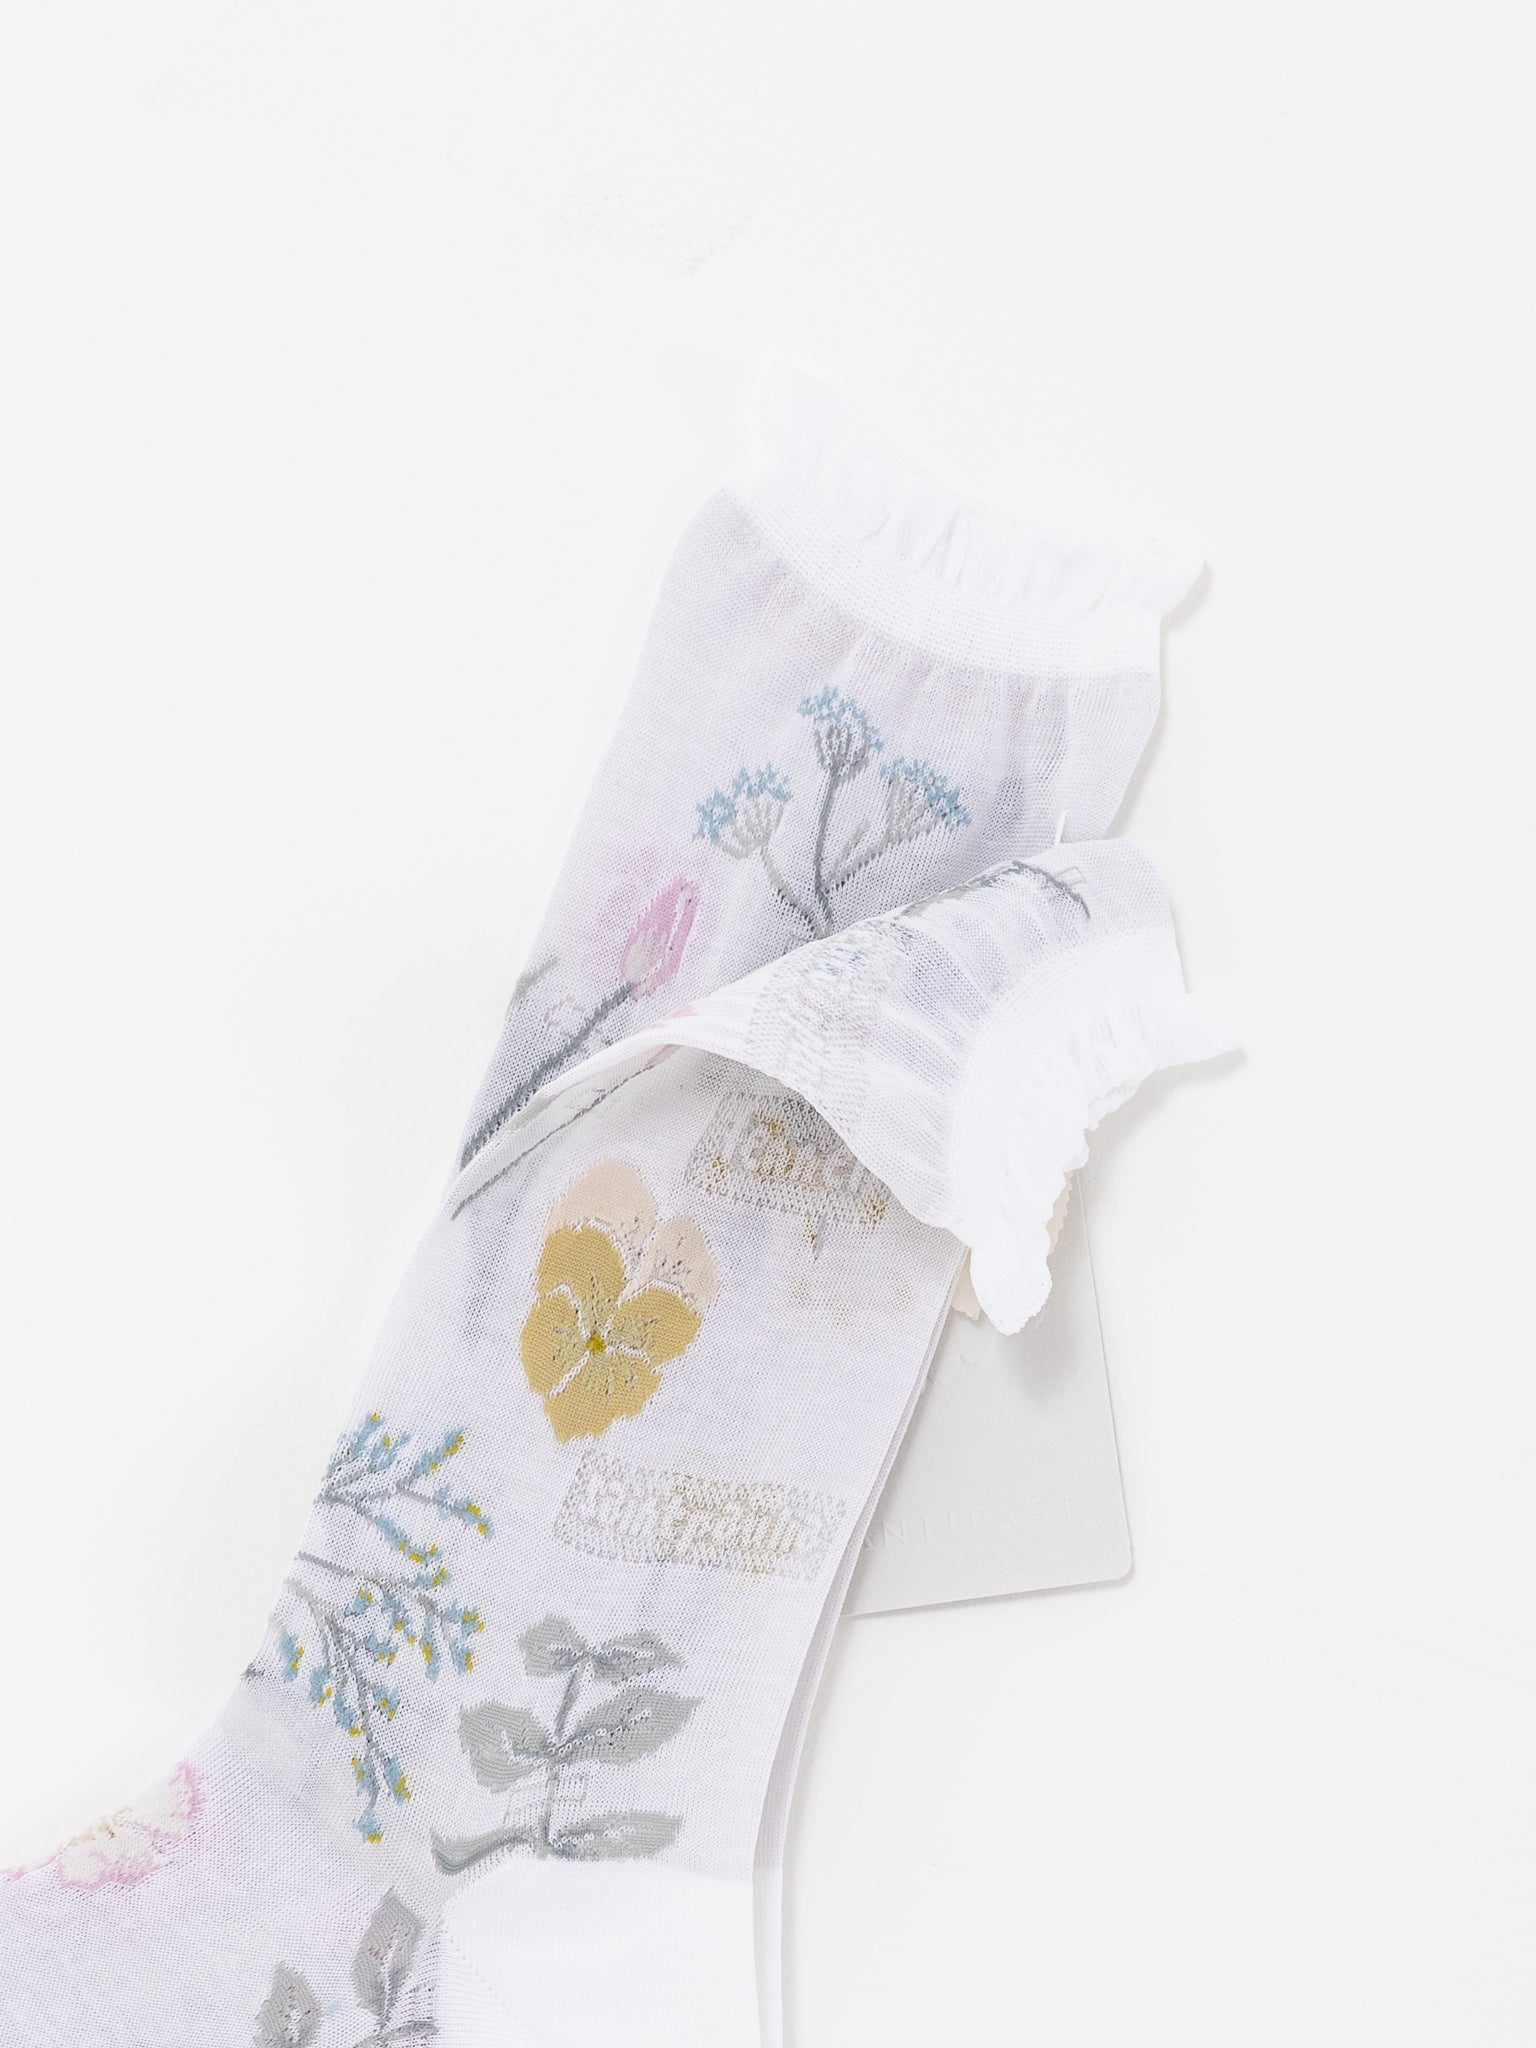 Antipast Pressed Flower Socks, White - Worthwhile